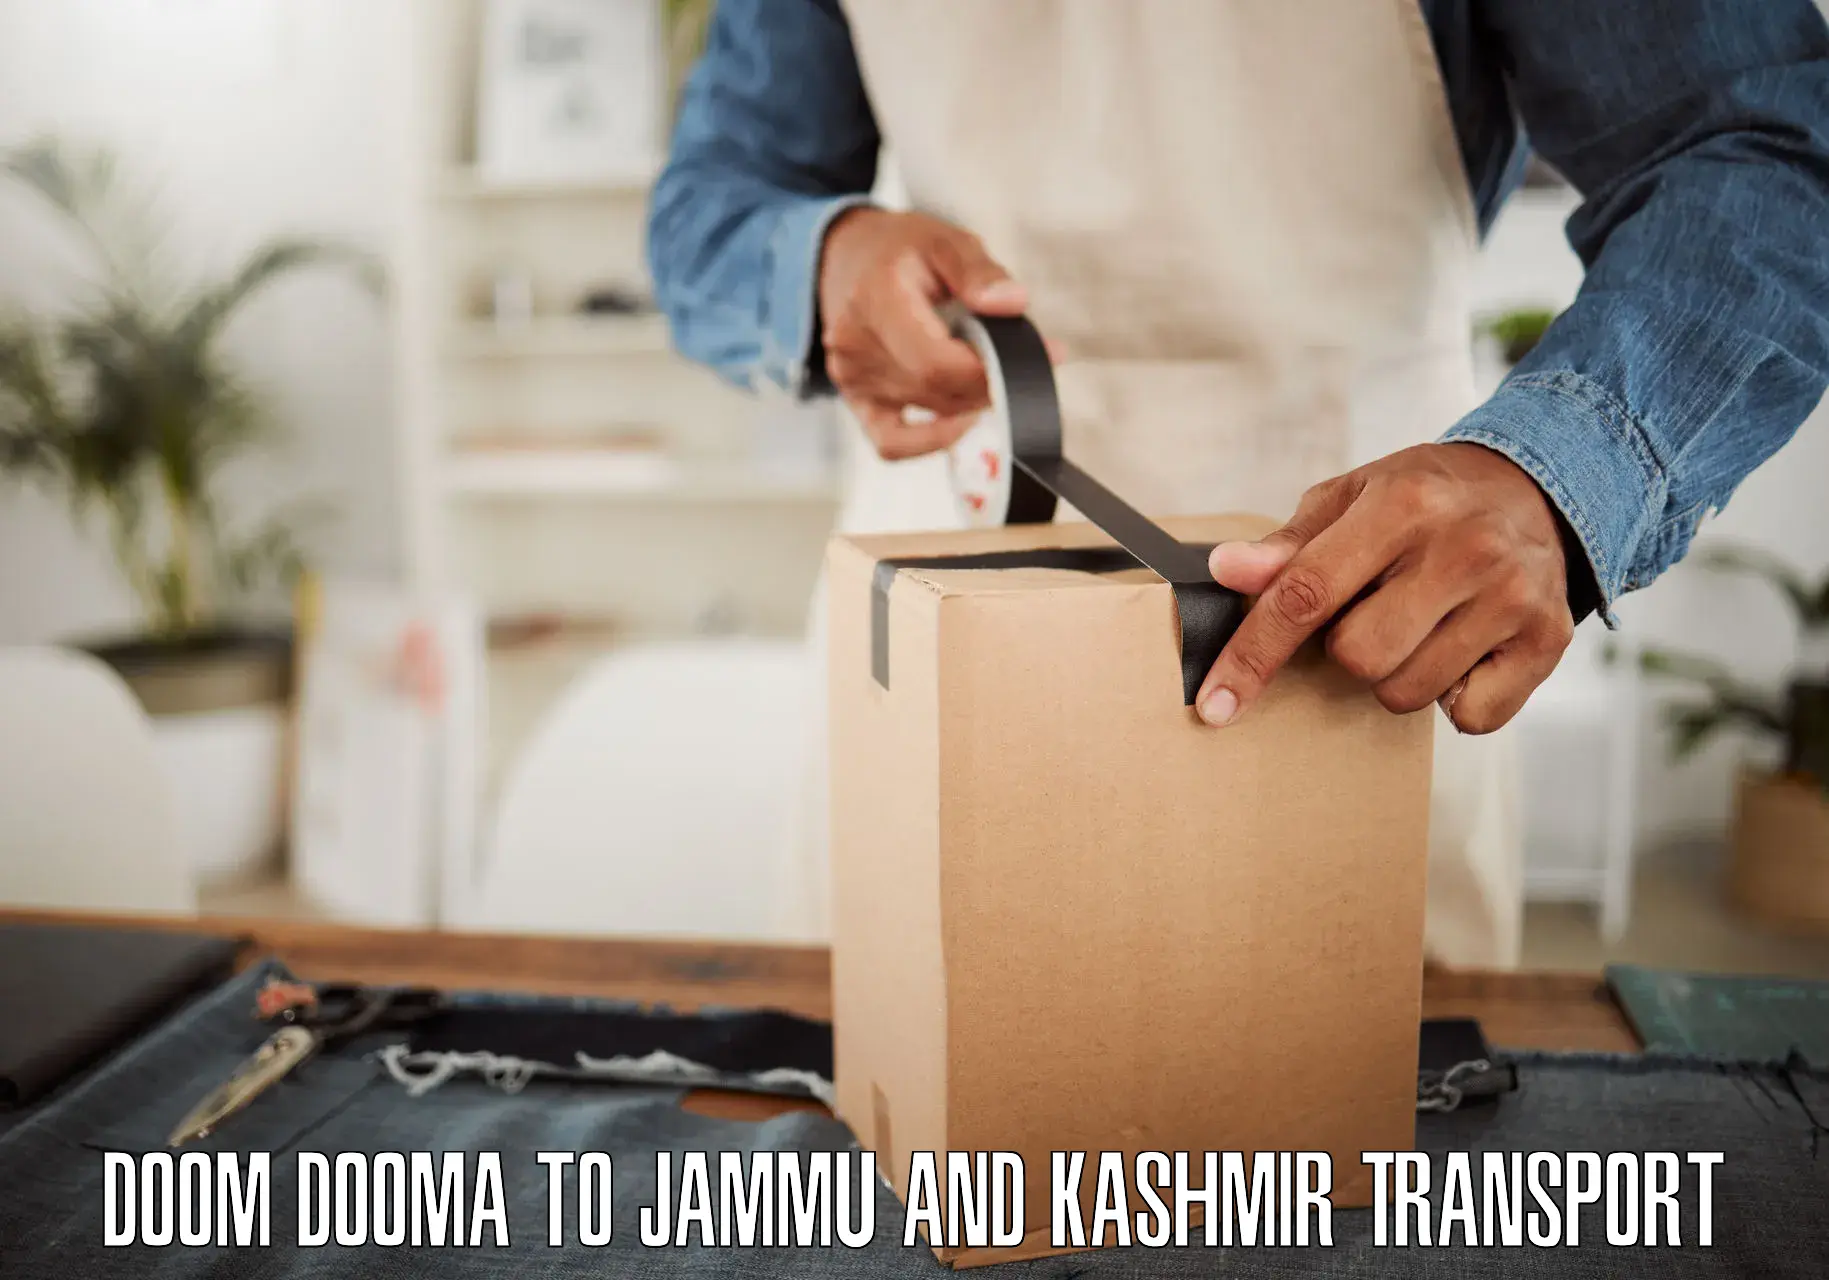 Commercial transport service Doom Dooma to Jammu and Kashmir